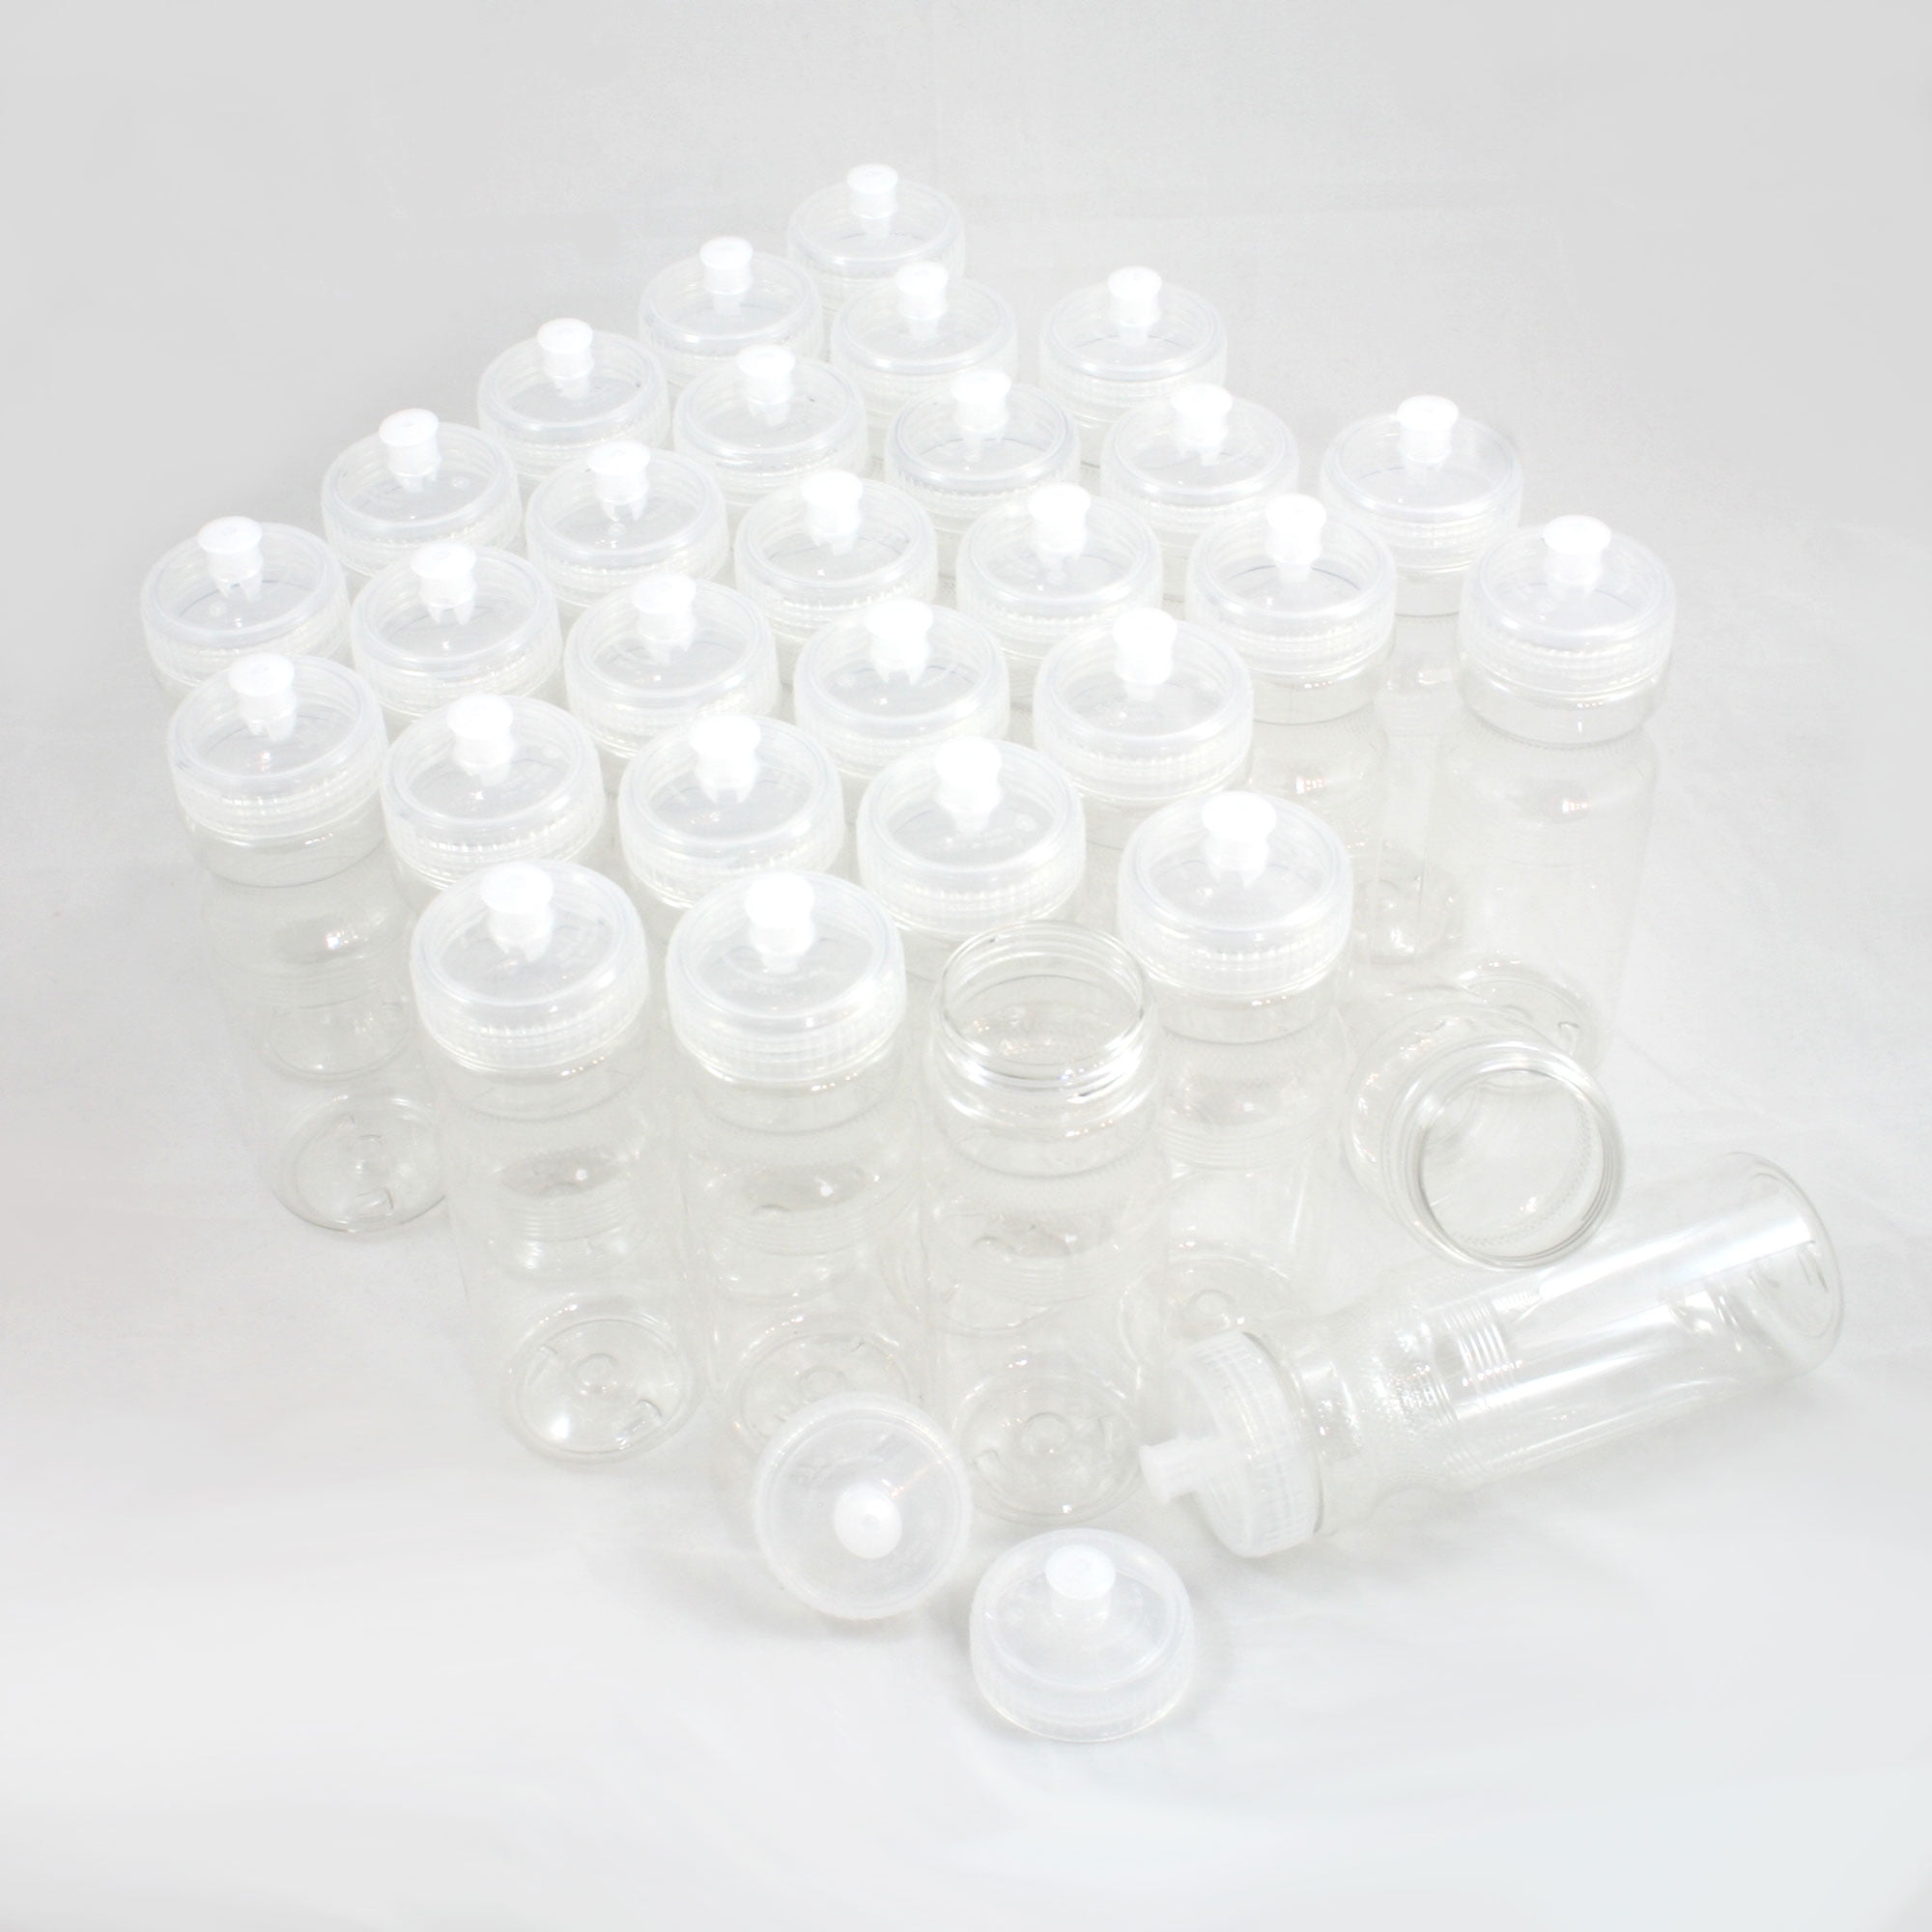 Water Bottles with Flip-Top Lids, 24 oz.Translucent Plastic Water Bottles  $7.87